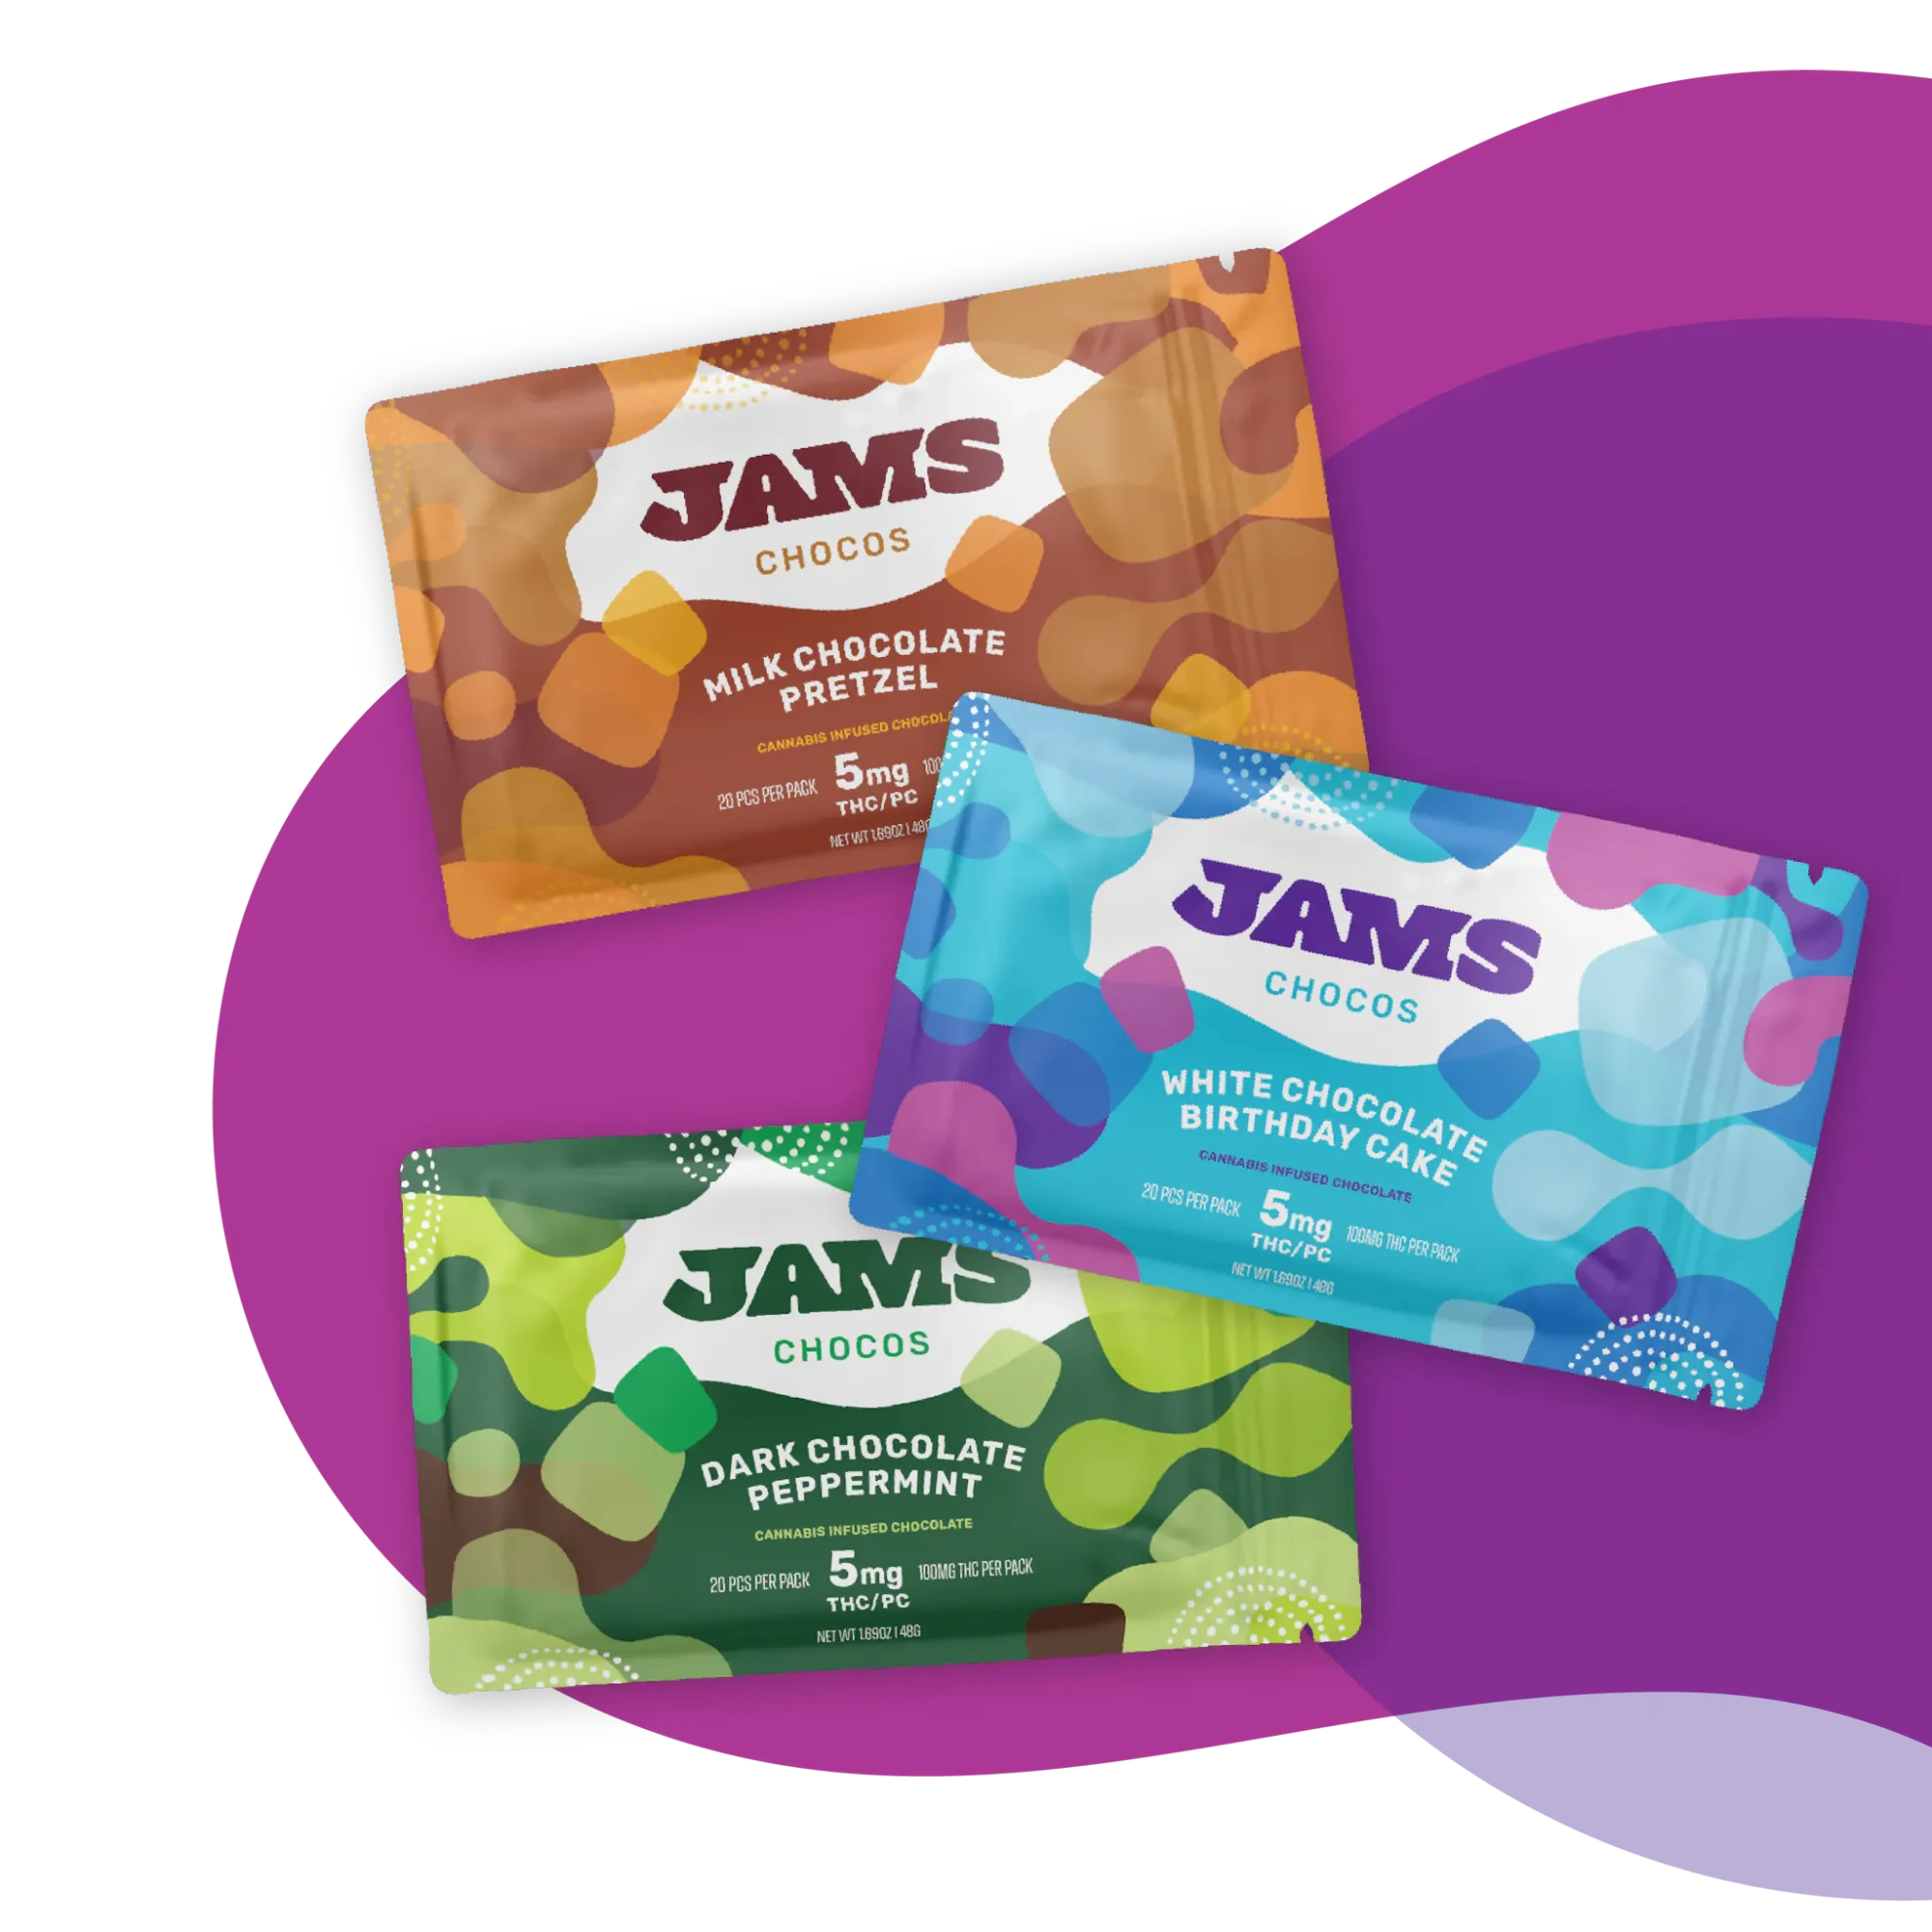 JAMS Chocos products